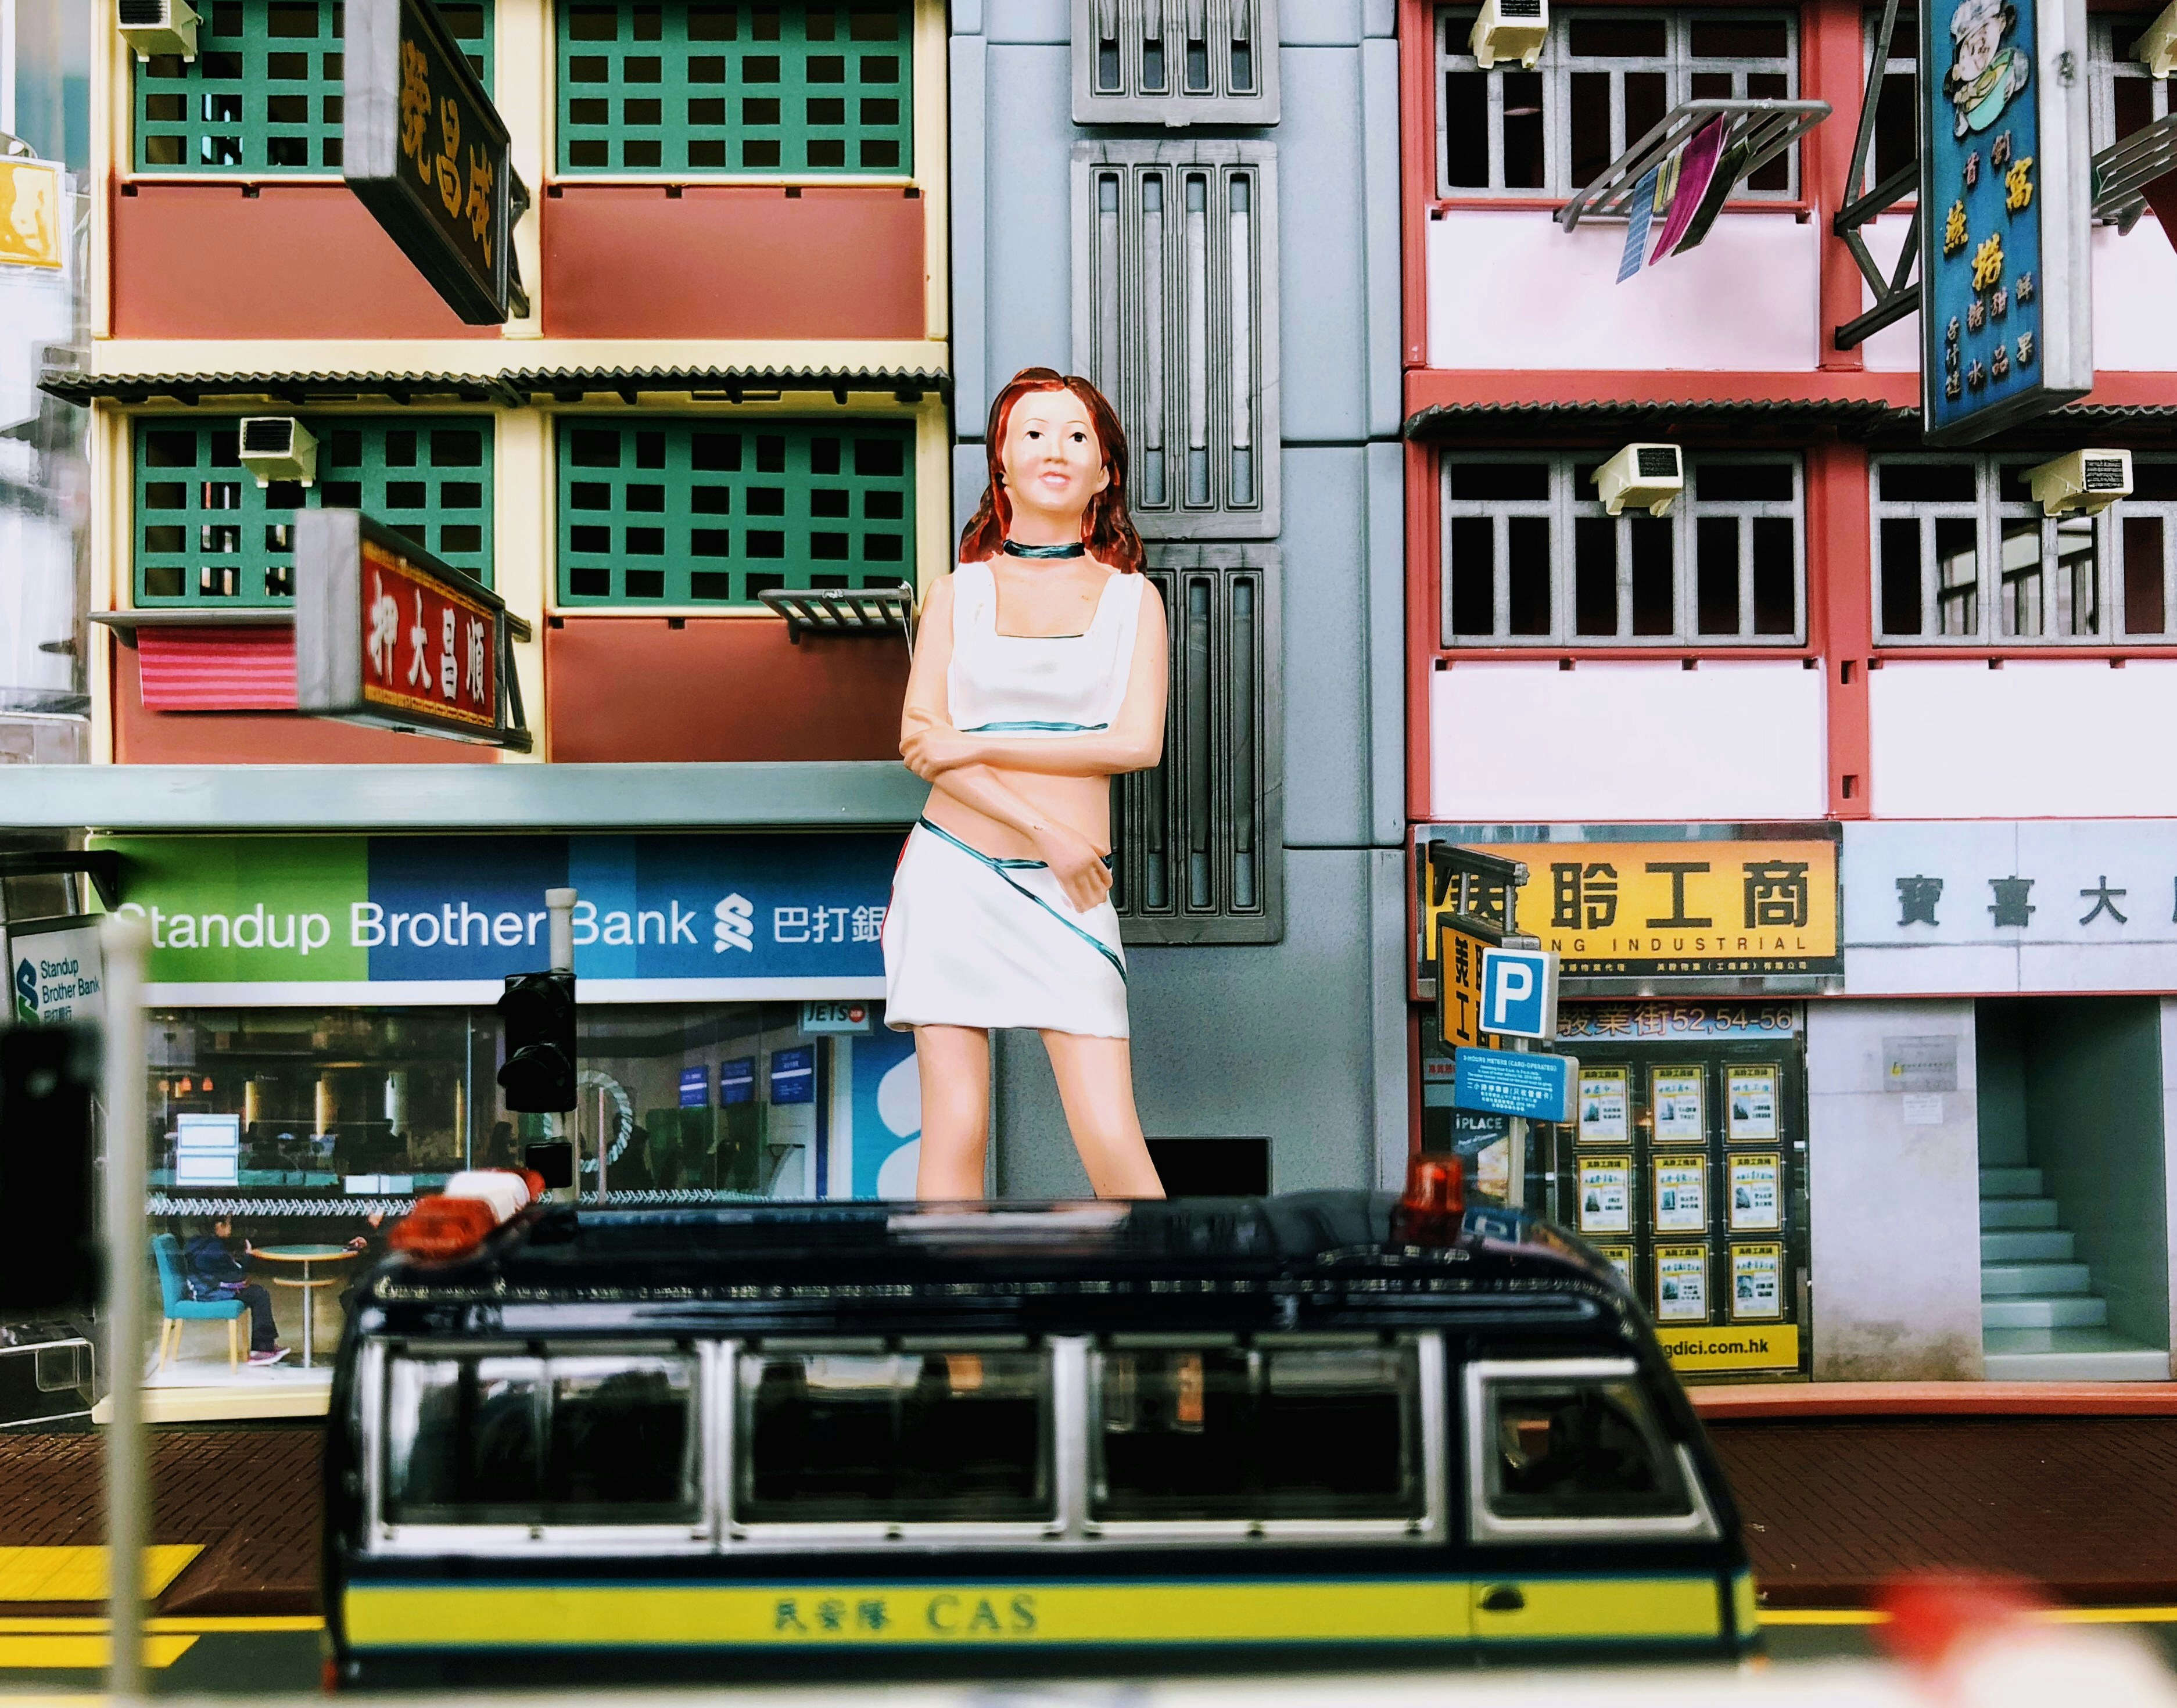 Model toy set on display in Hong Kong